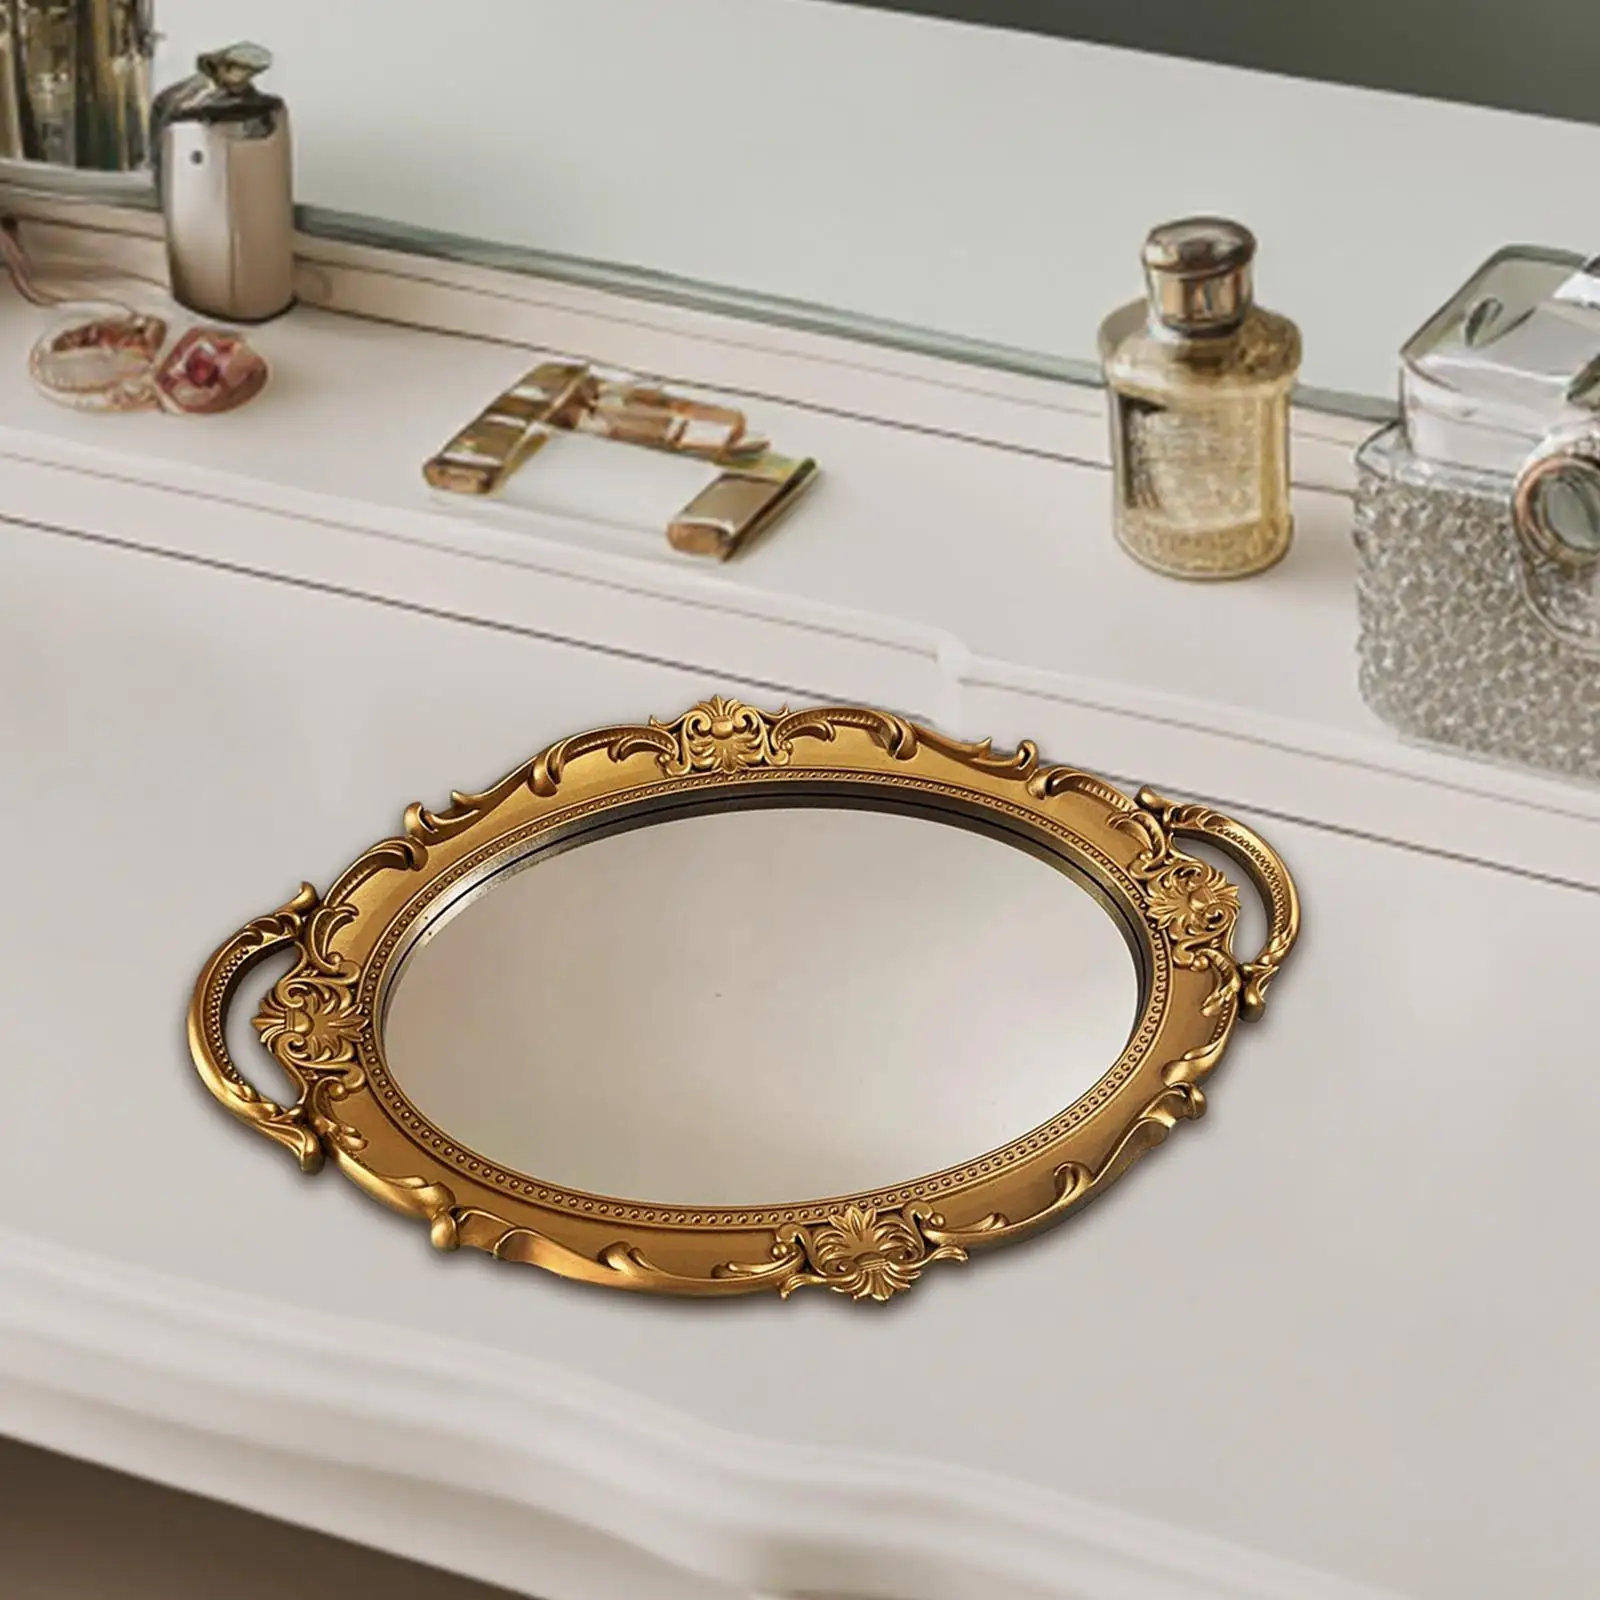 Decorative Vanity Tray Mirrored Desktop Serving Tray for Bedroom Countertop